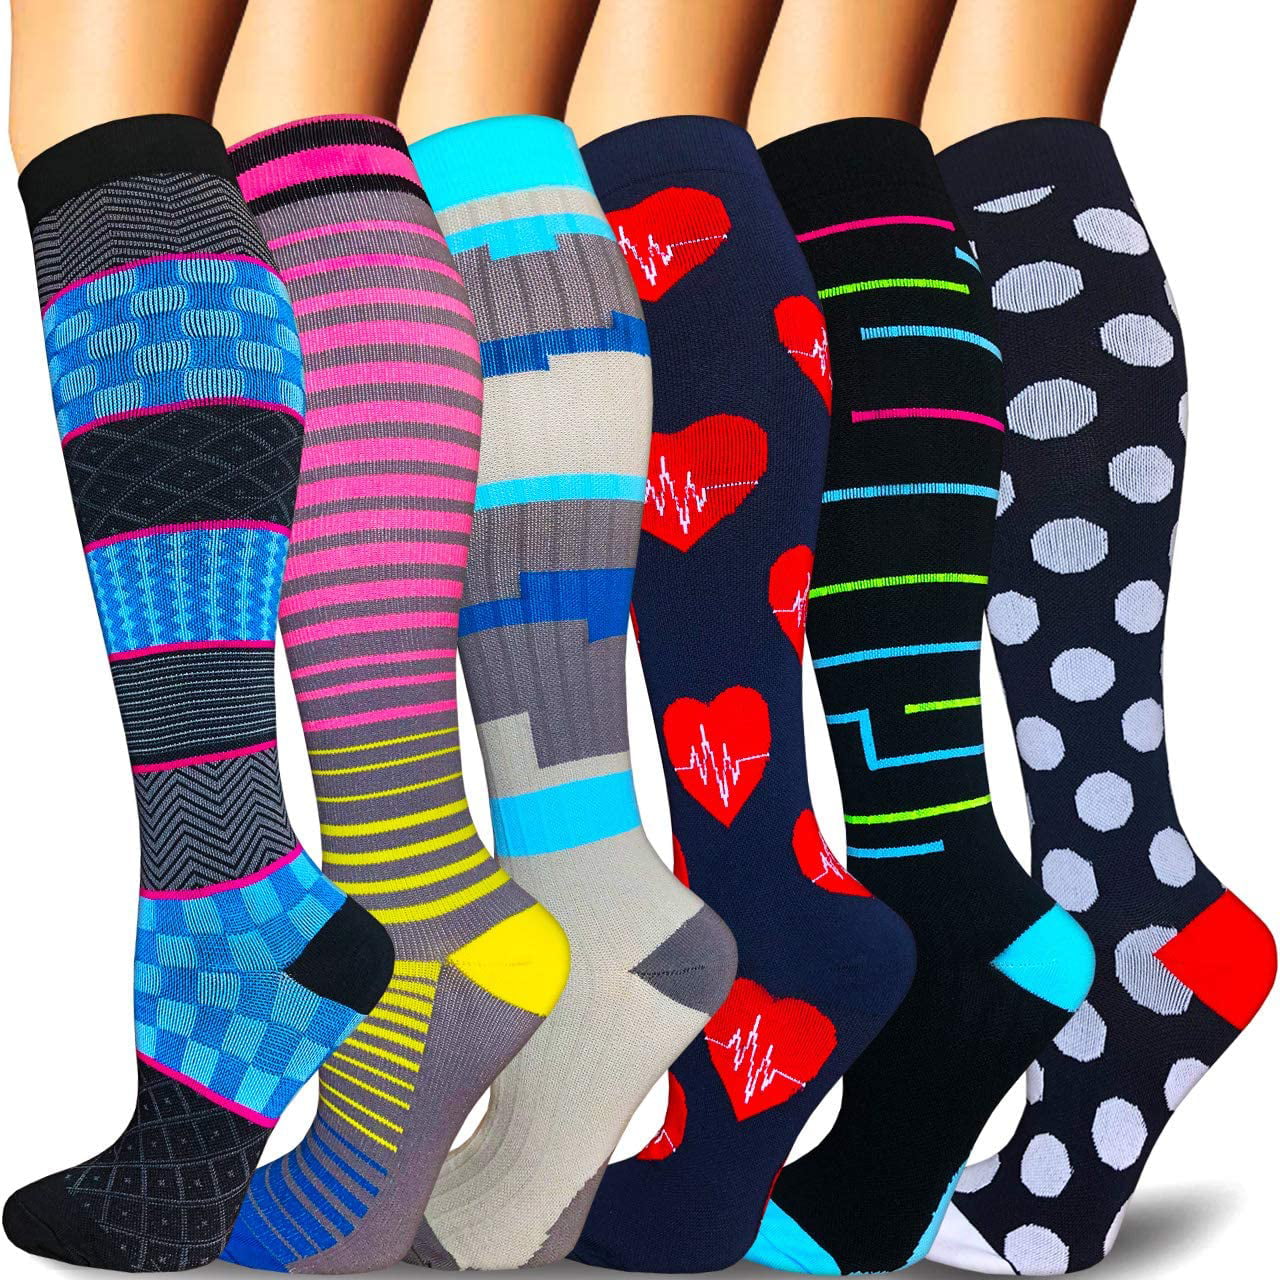 Olennz Compression Socks Women And Men Best Support For Sportsl Xl6 Pack